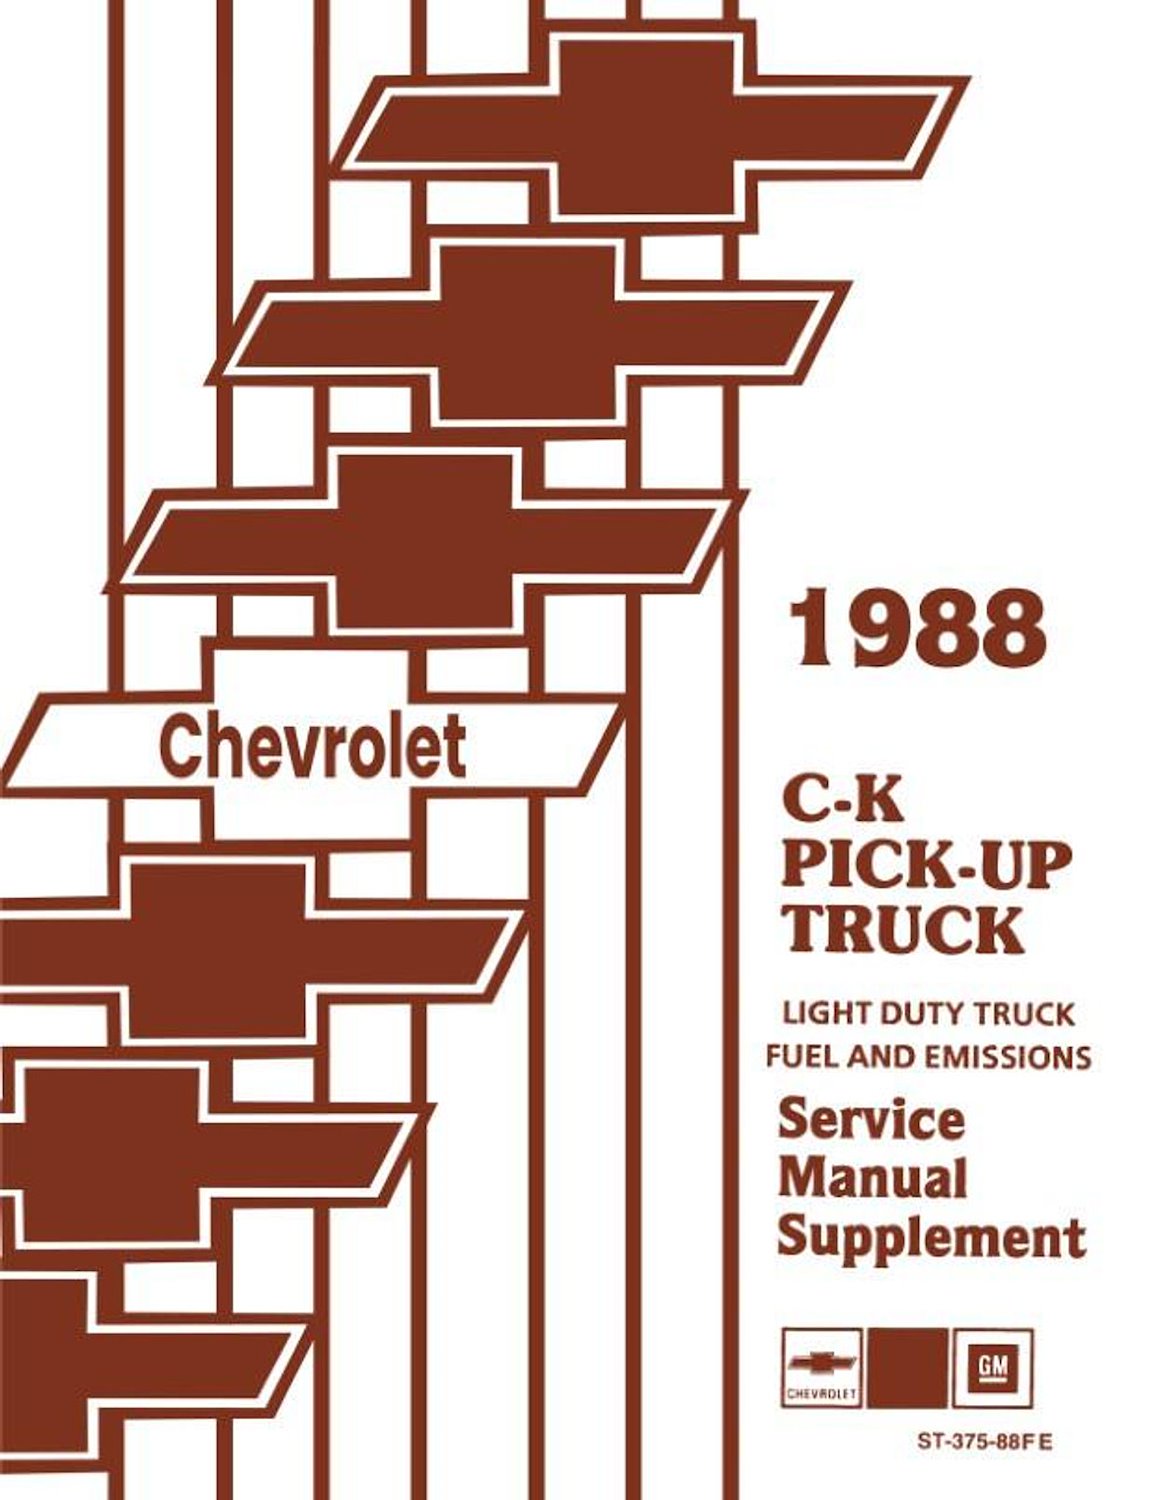 Shop Manual for 1988 Chevrolet Trucks [Supplement]